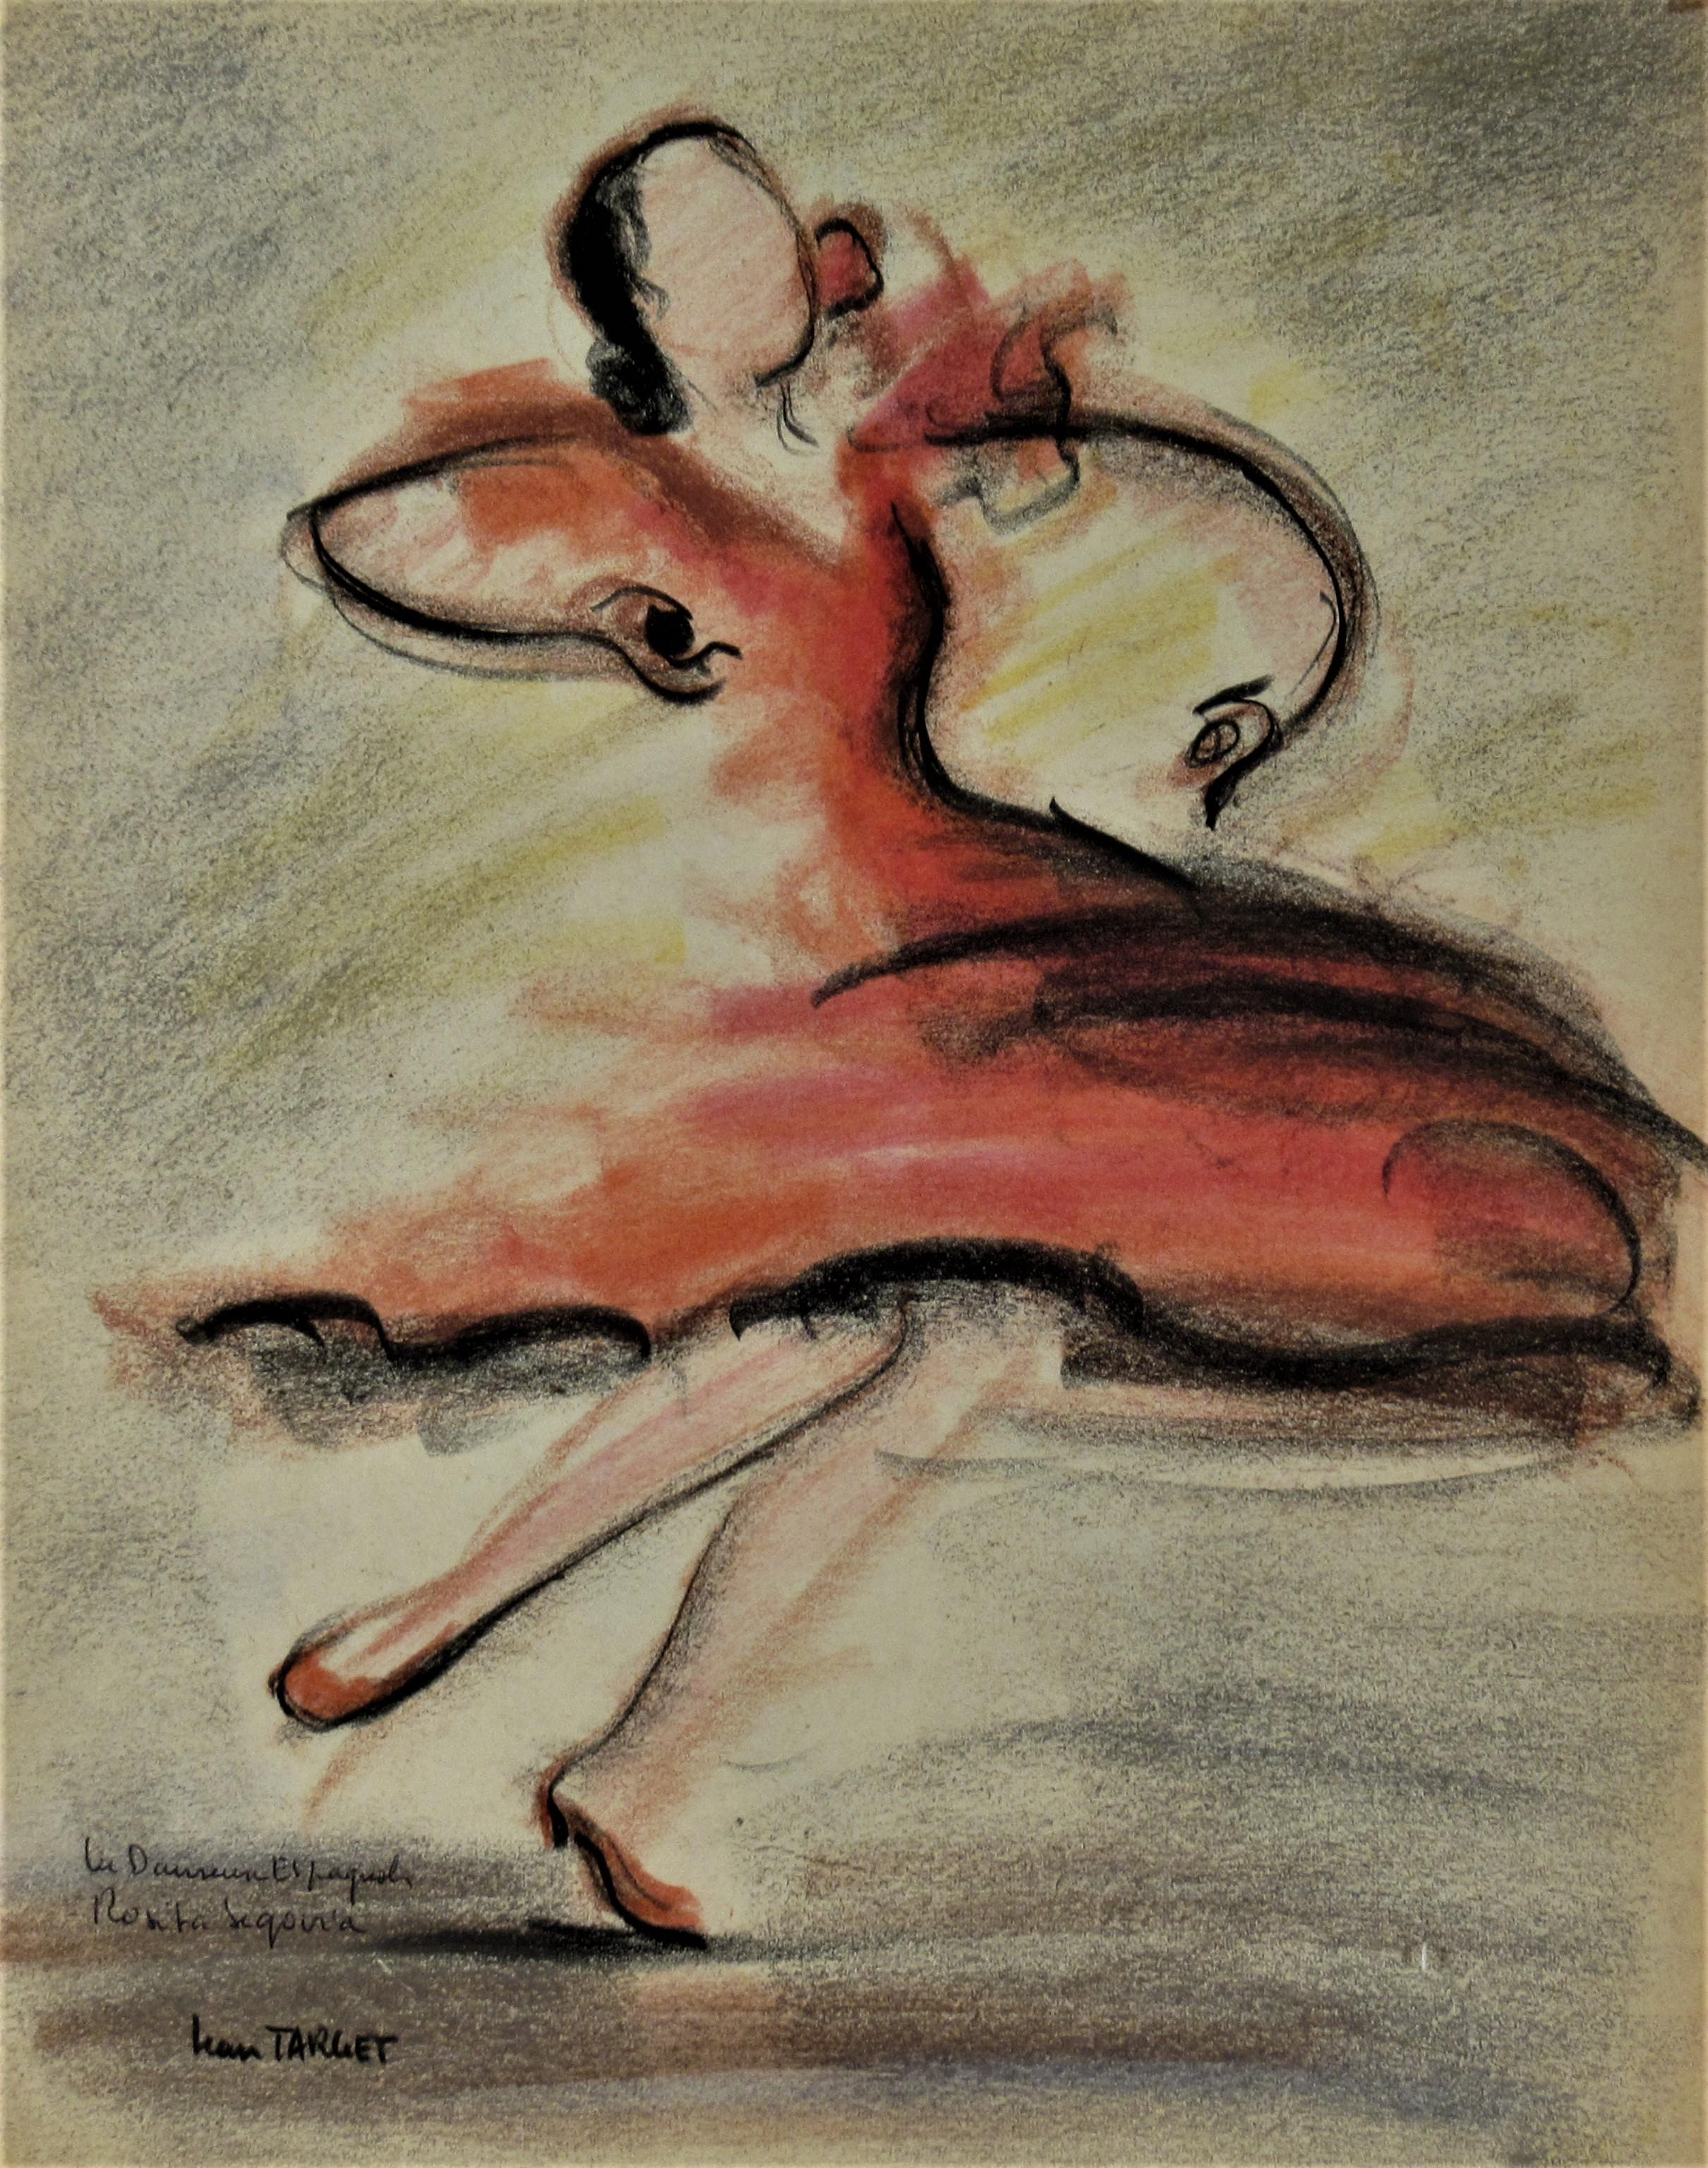 La Danseuse Espagnol Rosita Segovia ( The Spanish Dancer Rosita Segovia)